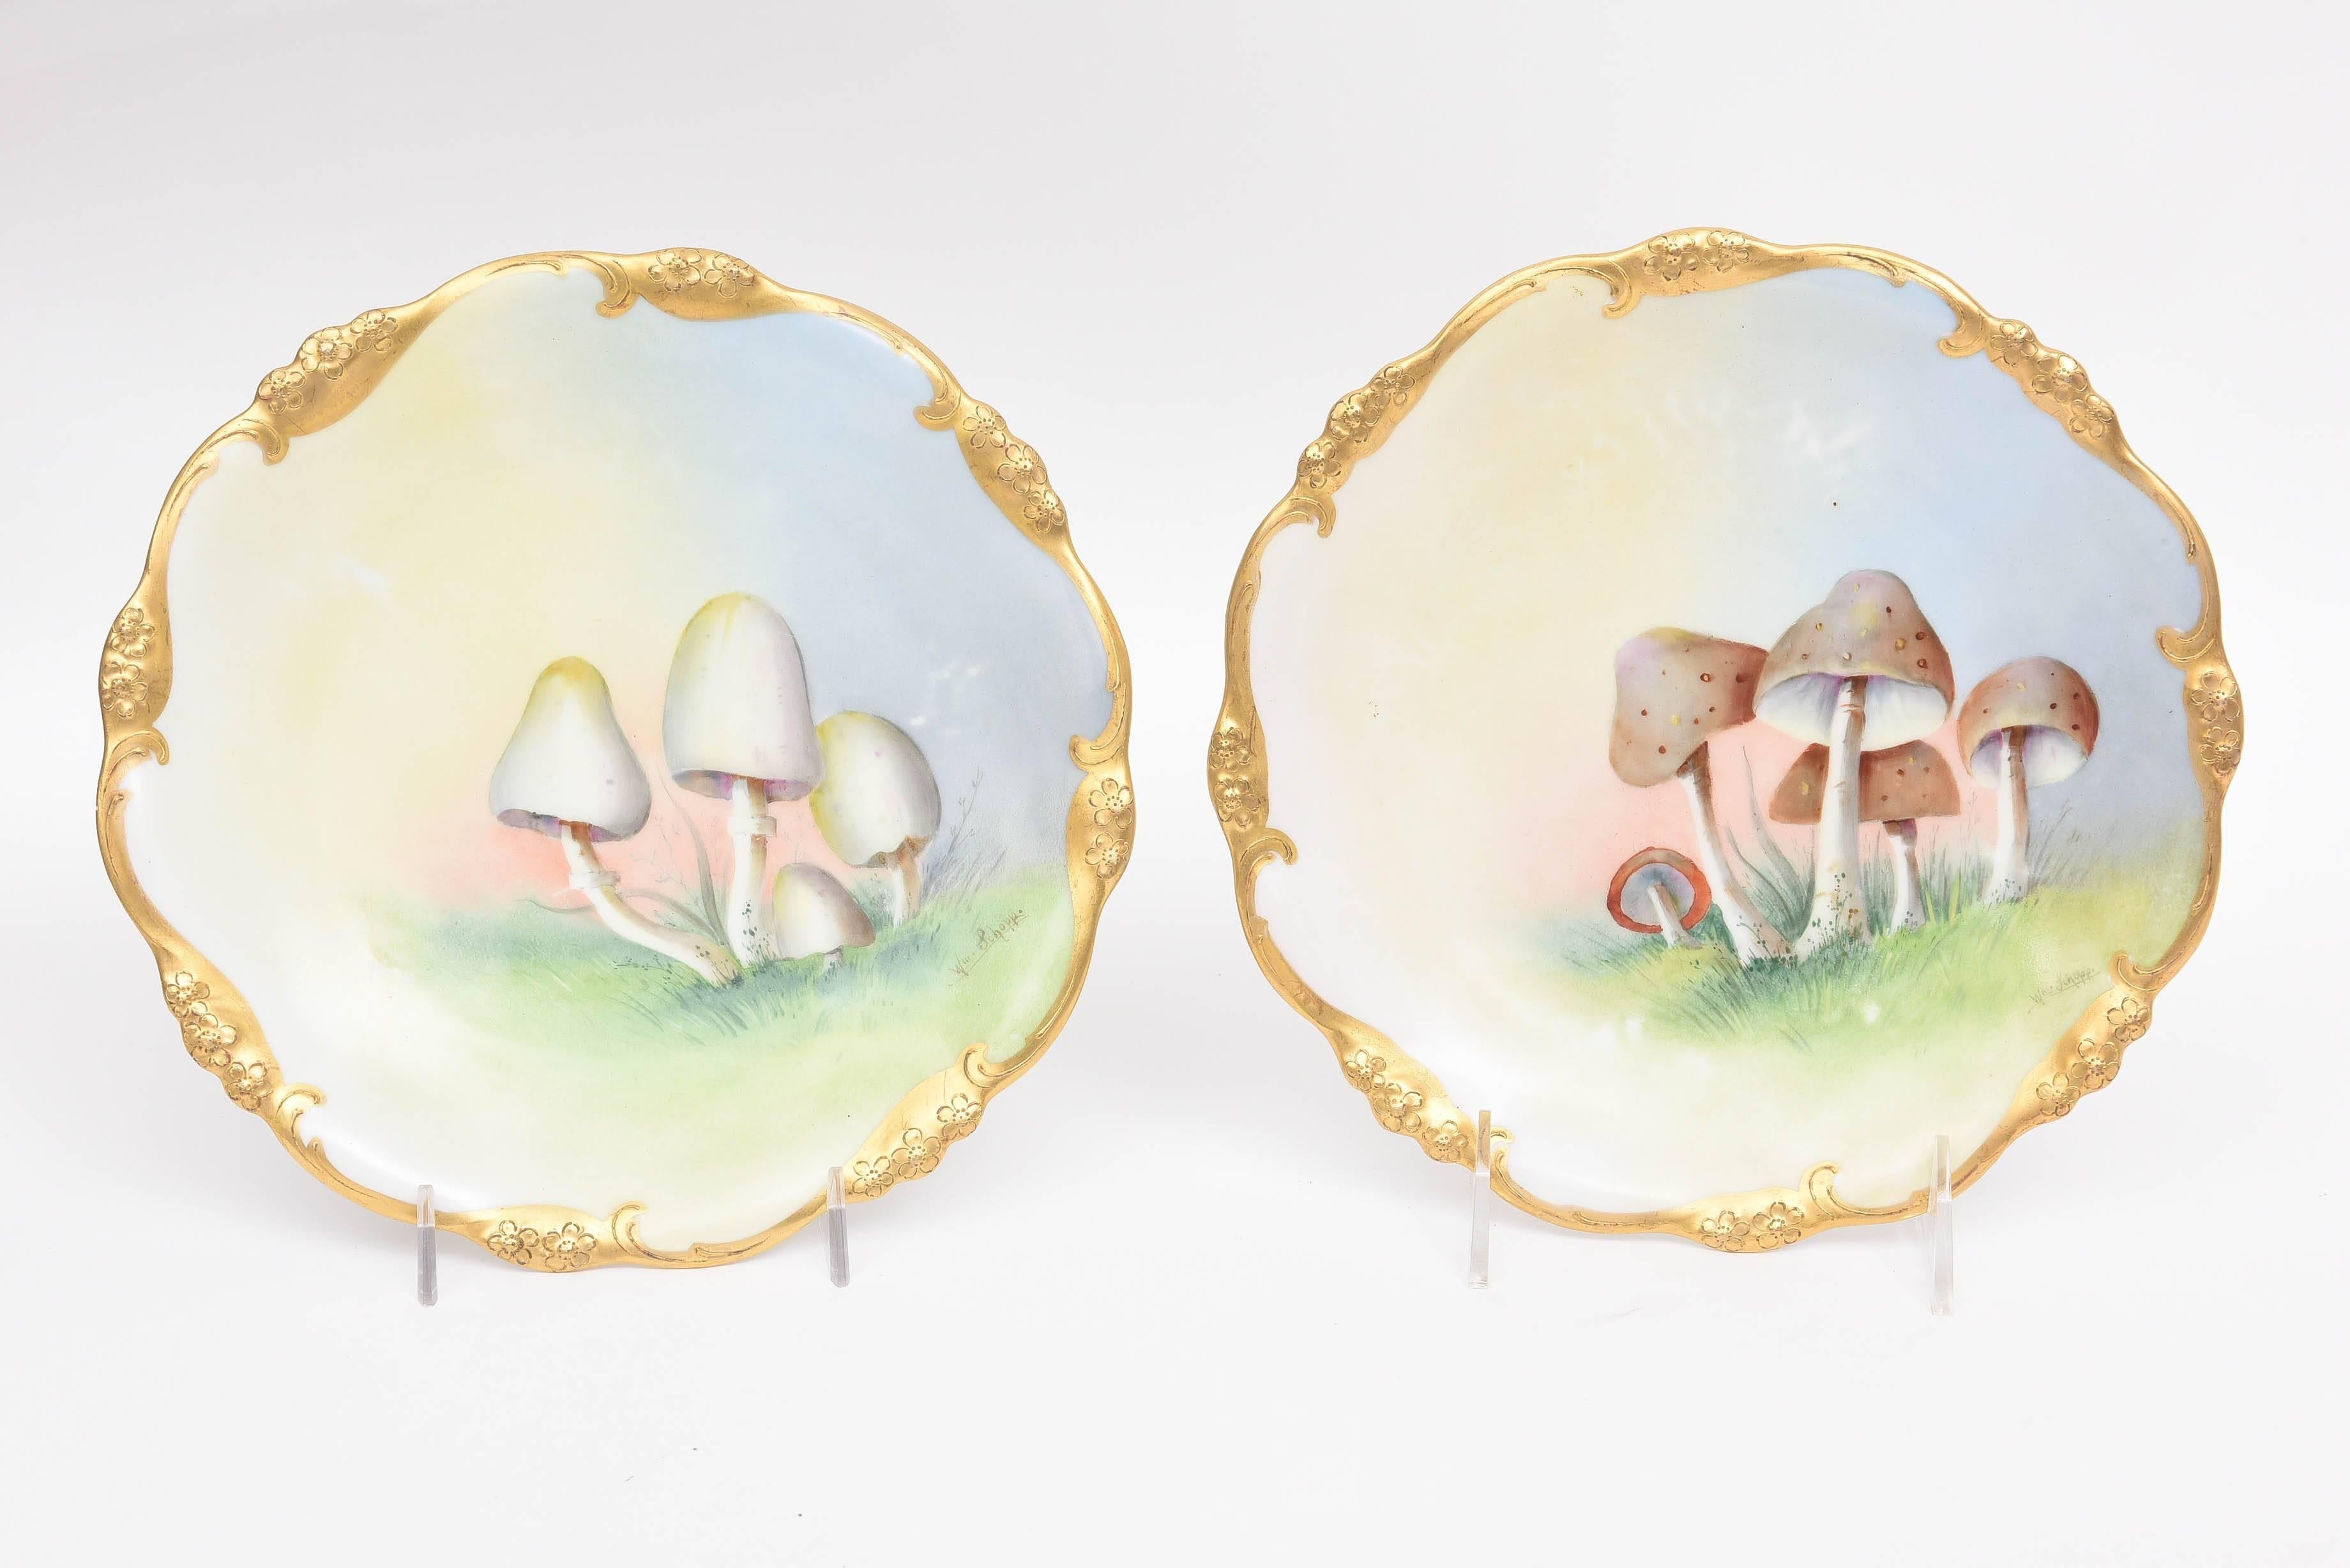 12 Antique Hand-Painted Mushroom Plates, Gold Trim, Limoges 1